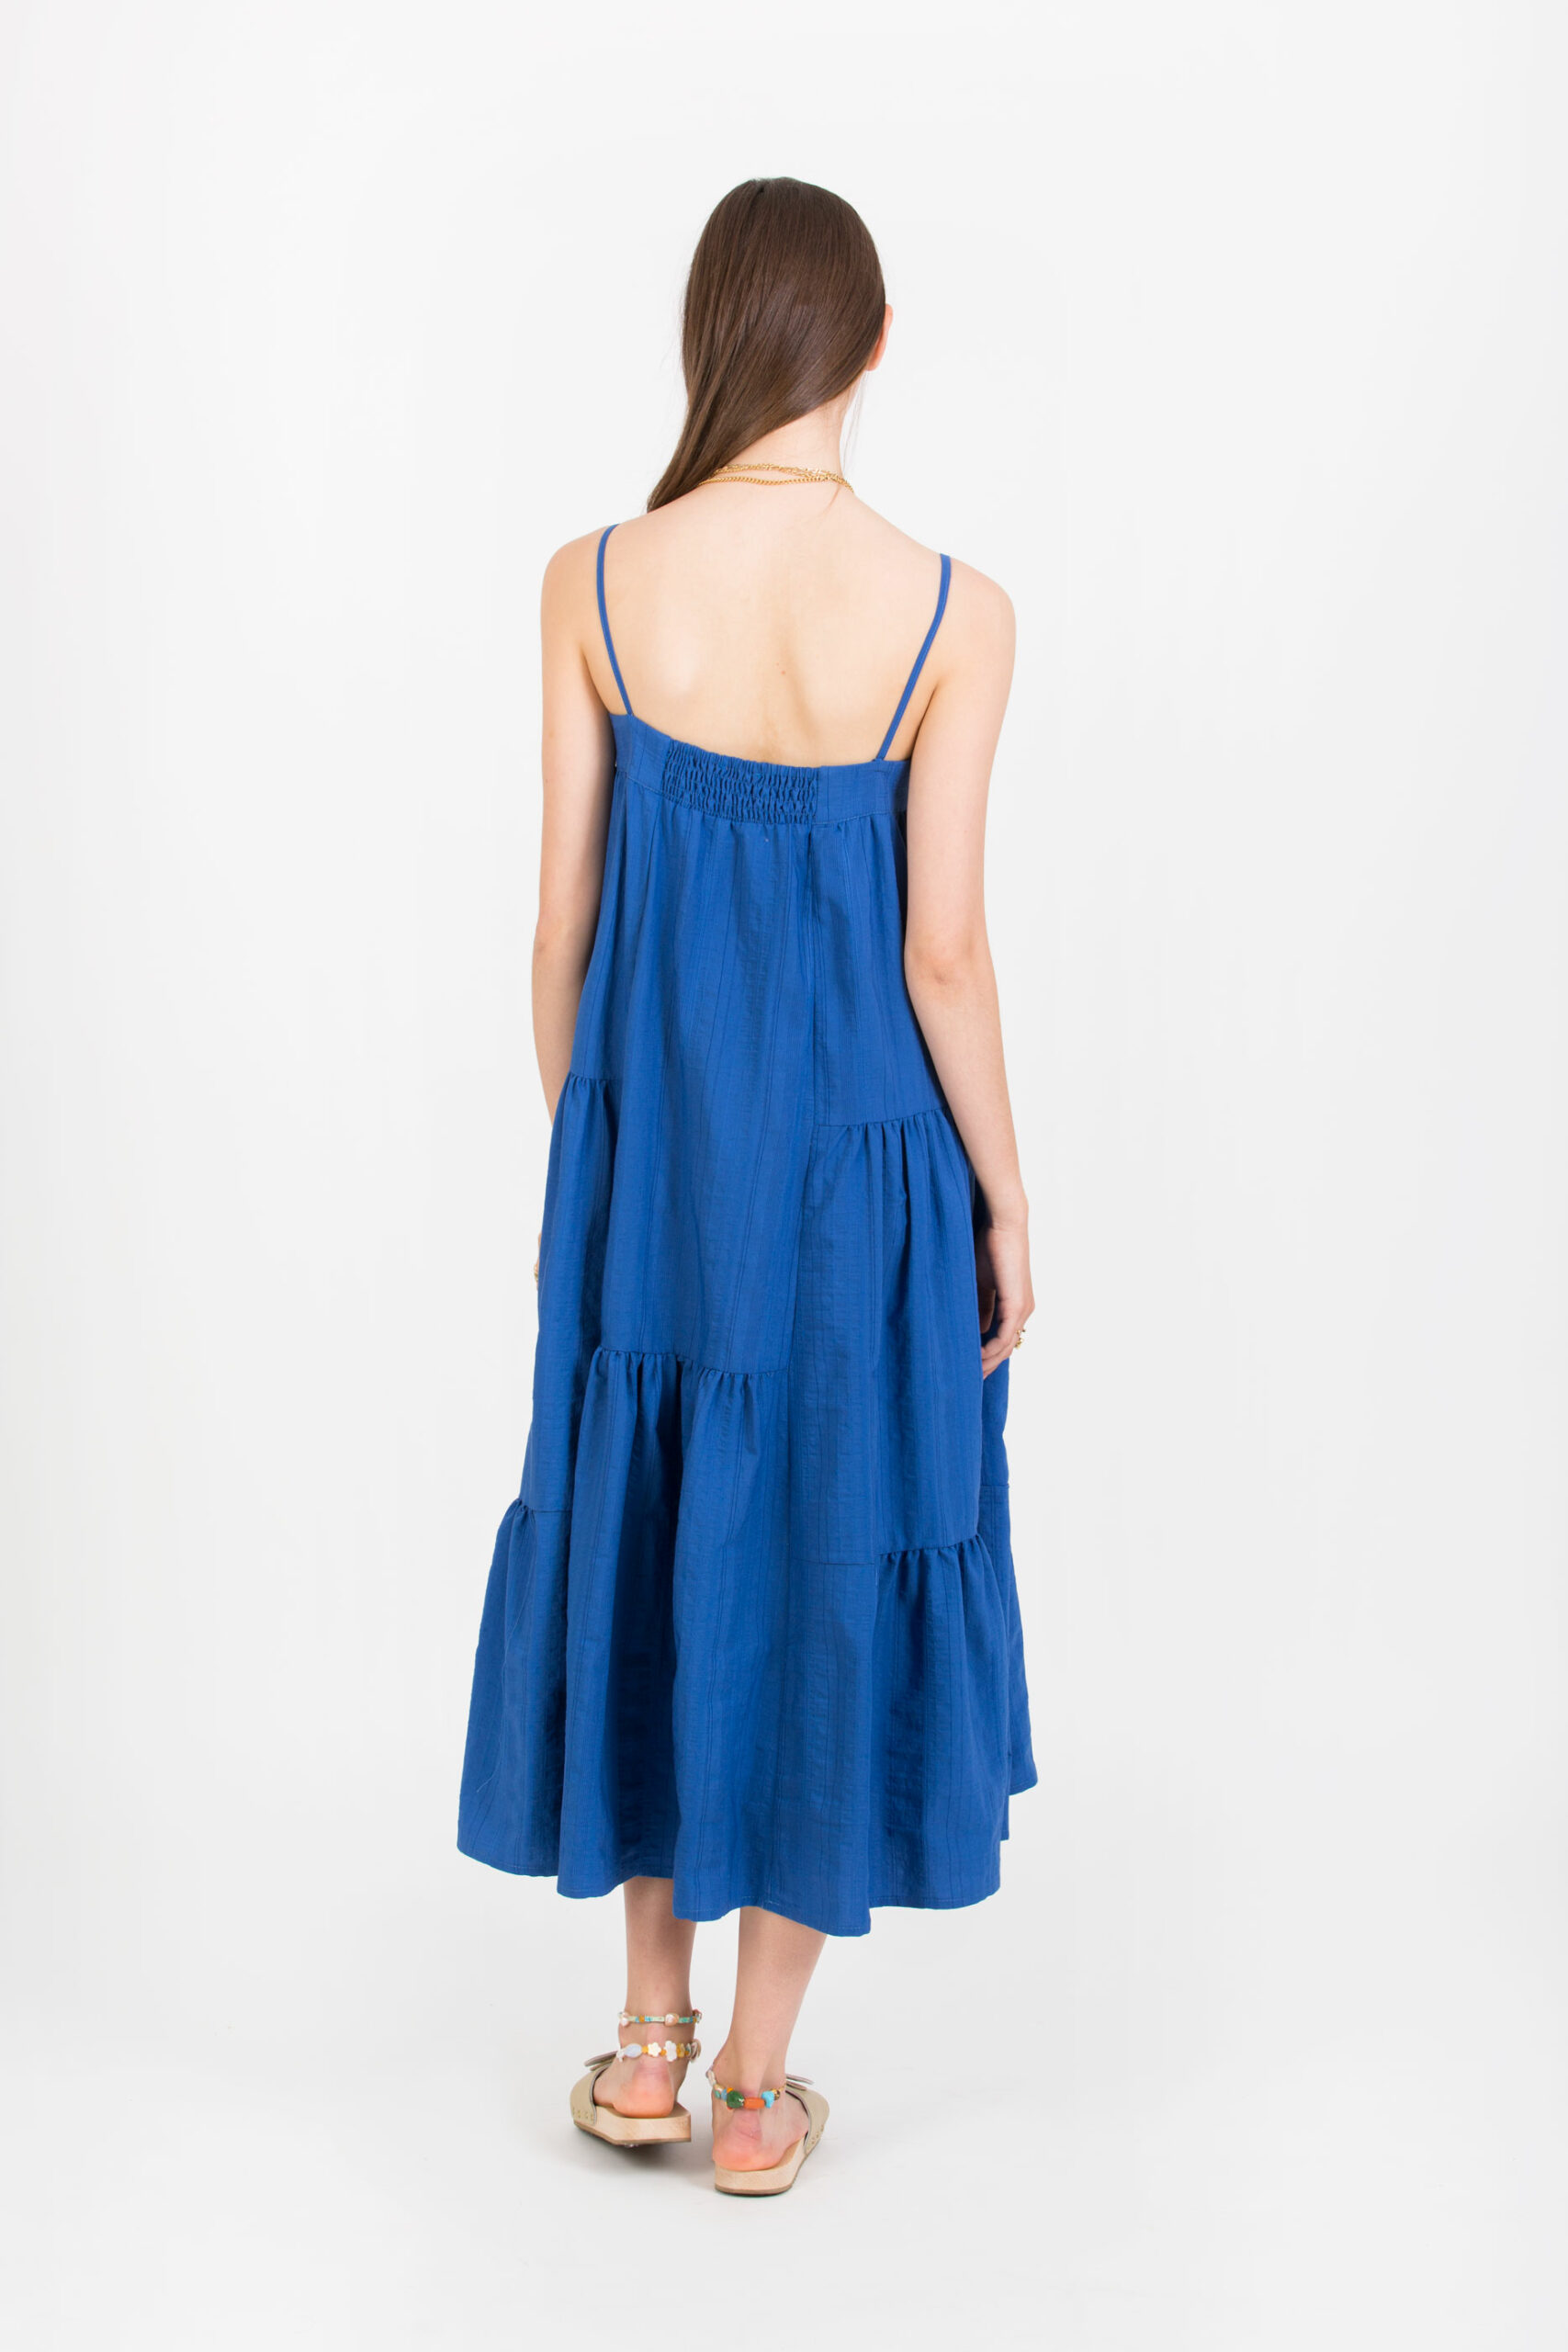 Polly Blue Dress - Shop - Uniforme